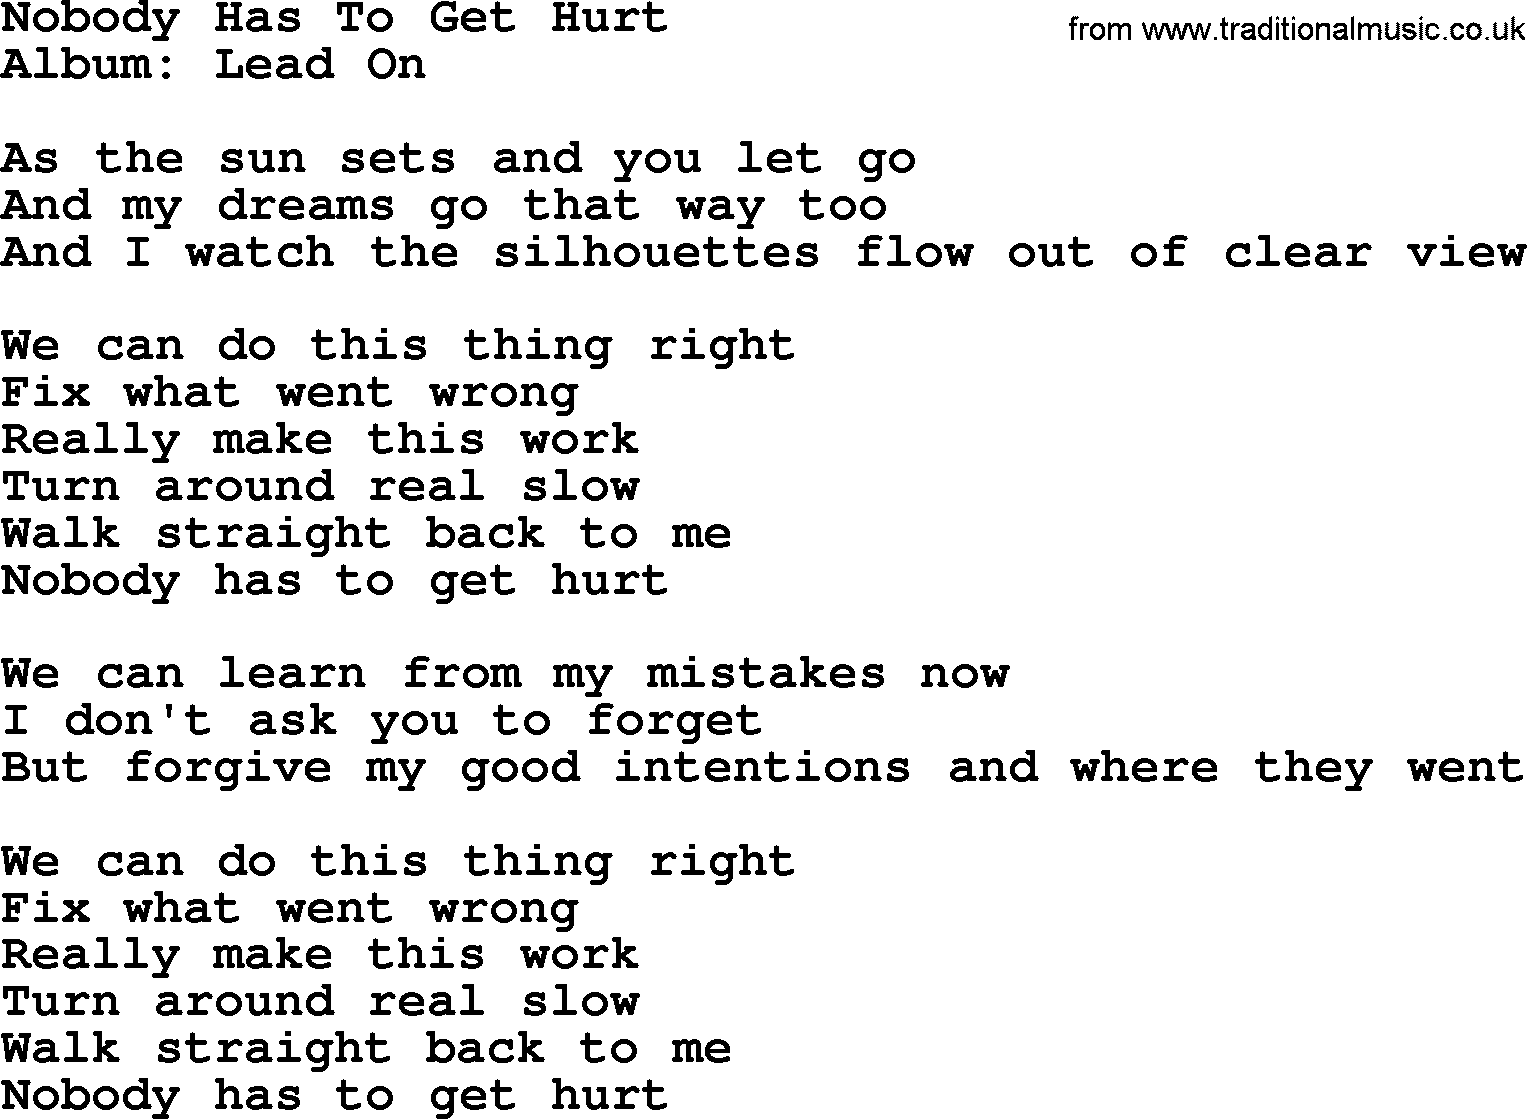 George Strait song: Nobody Has To Get Hurt, lyrics